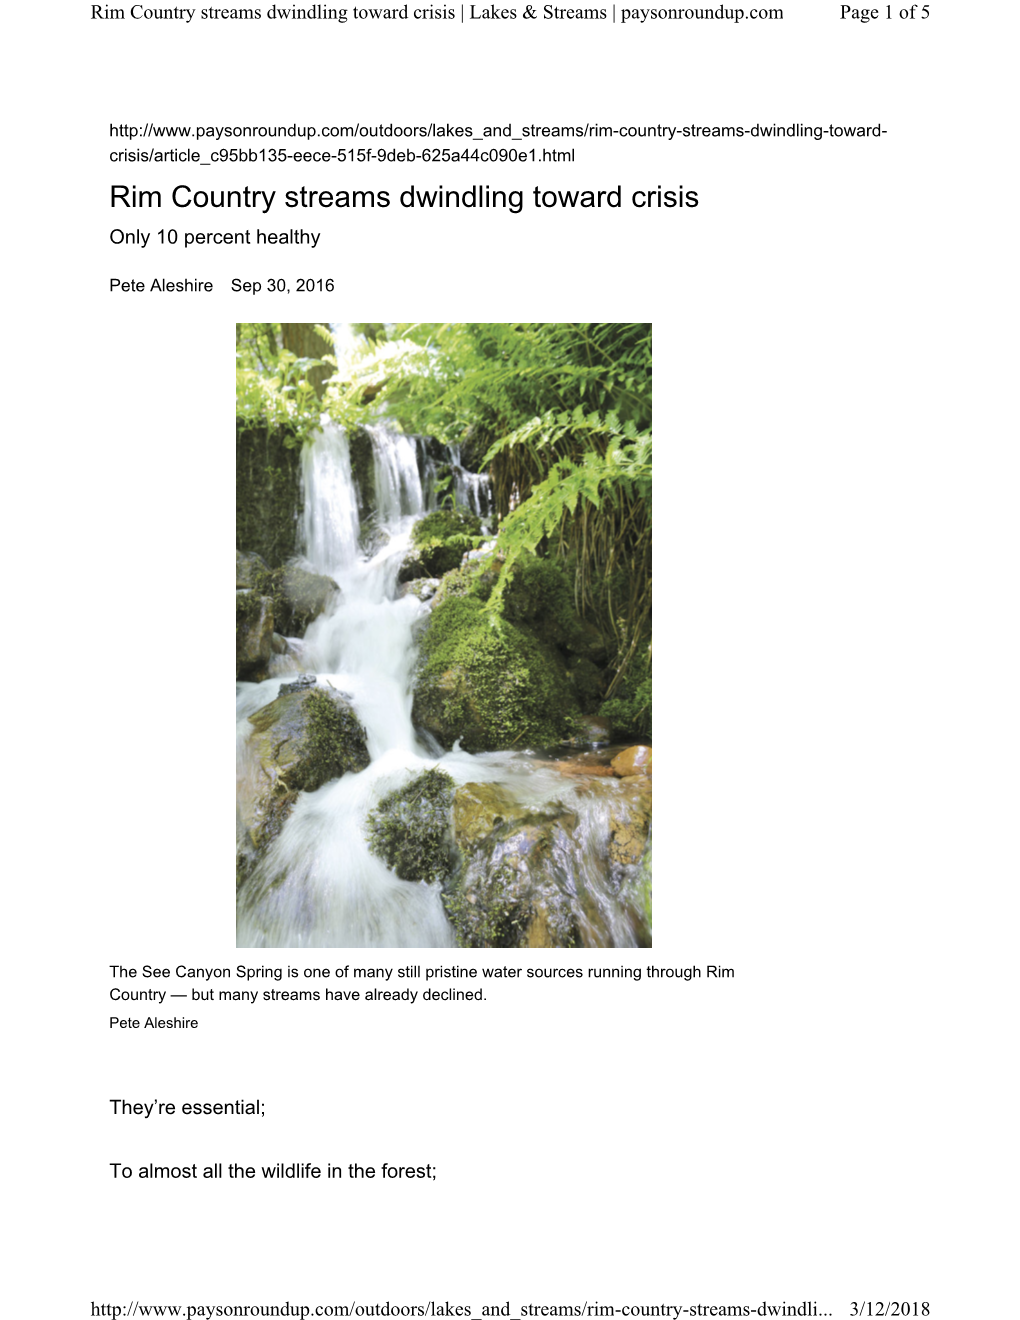 Rim Country Streams Dwindling Toward Crisis | Lakes & Streams | Paysonroundup.Com Page 1 of 5